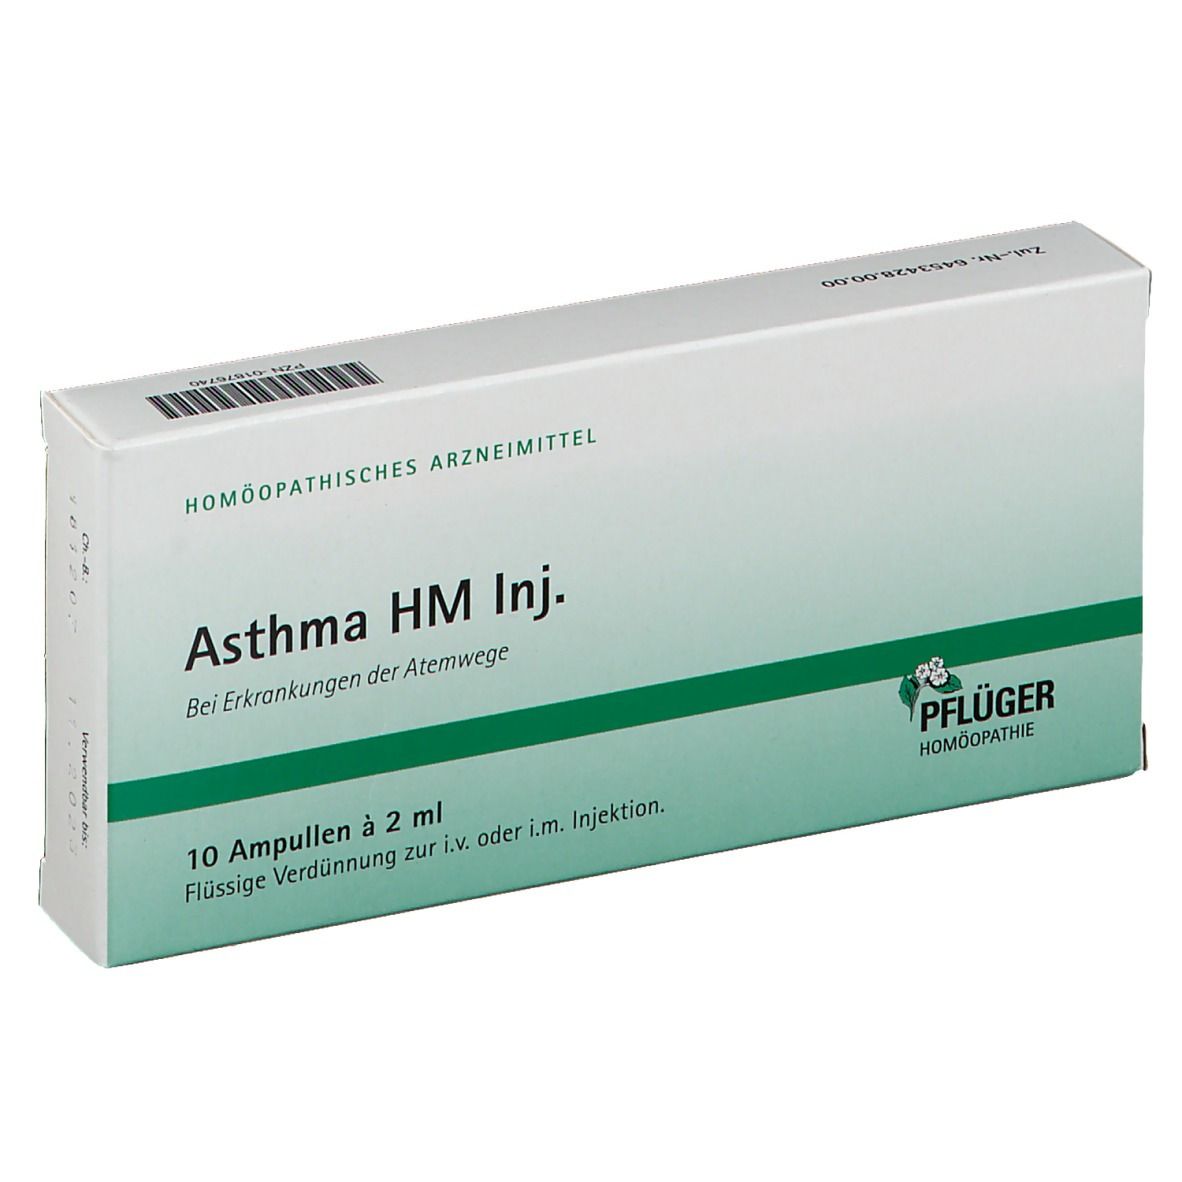 Asthma HM Inj.